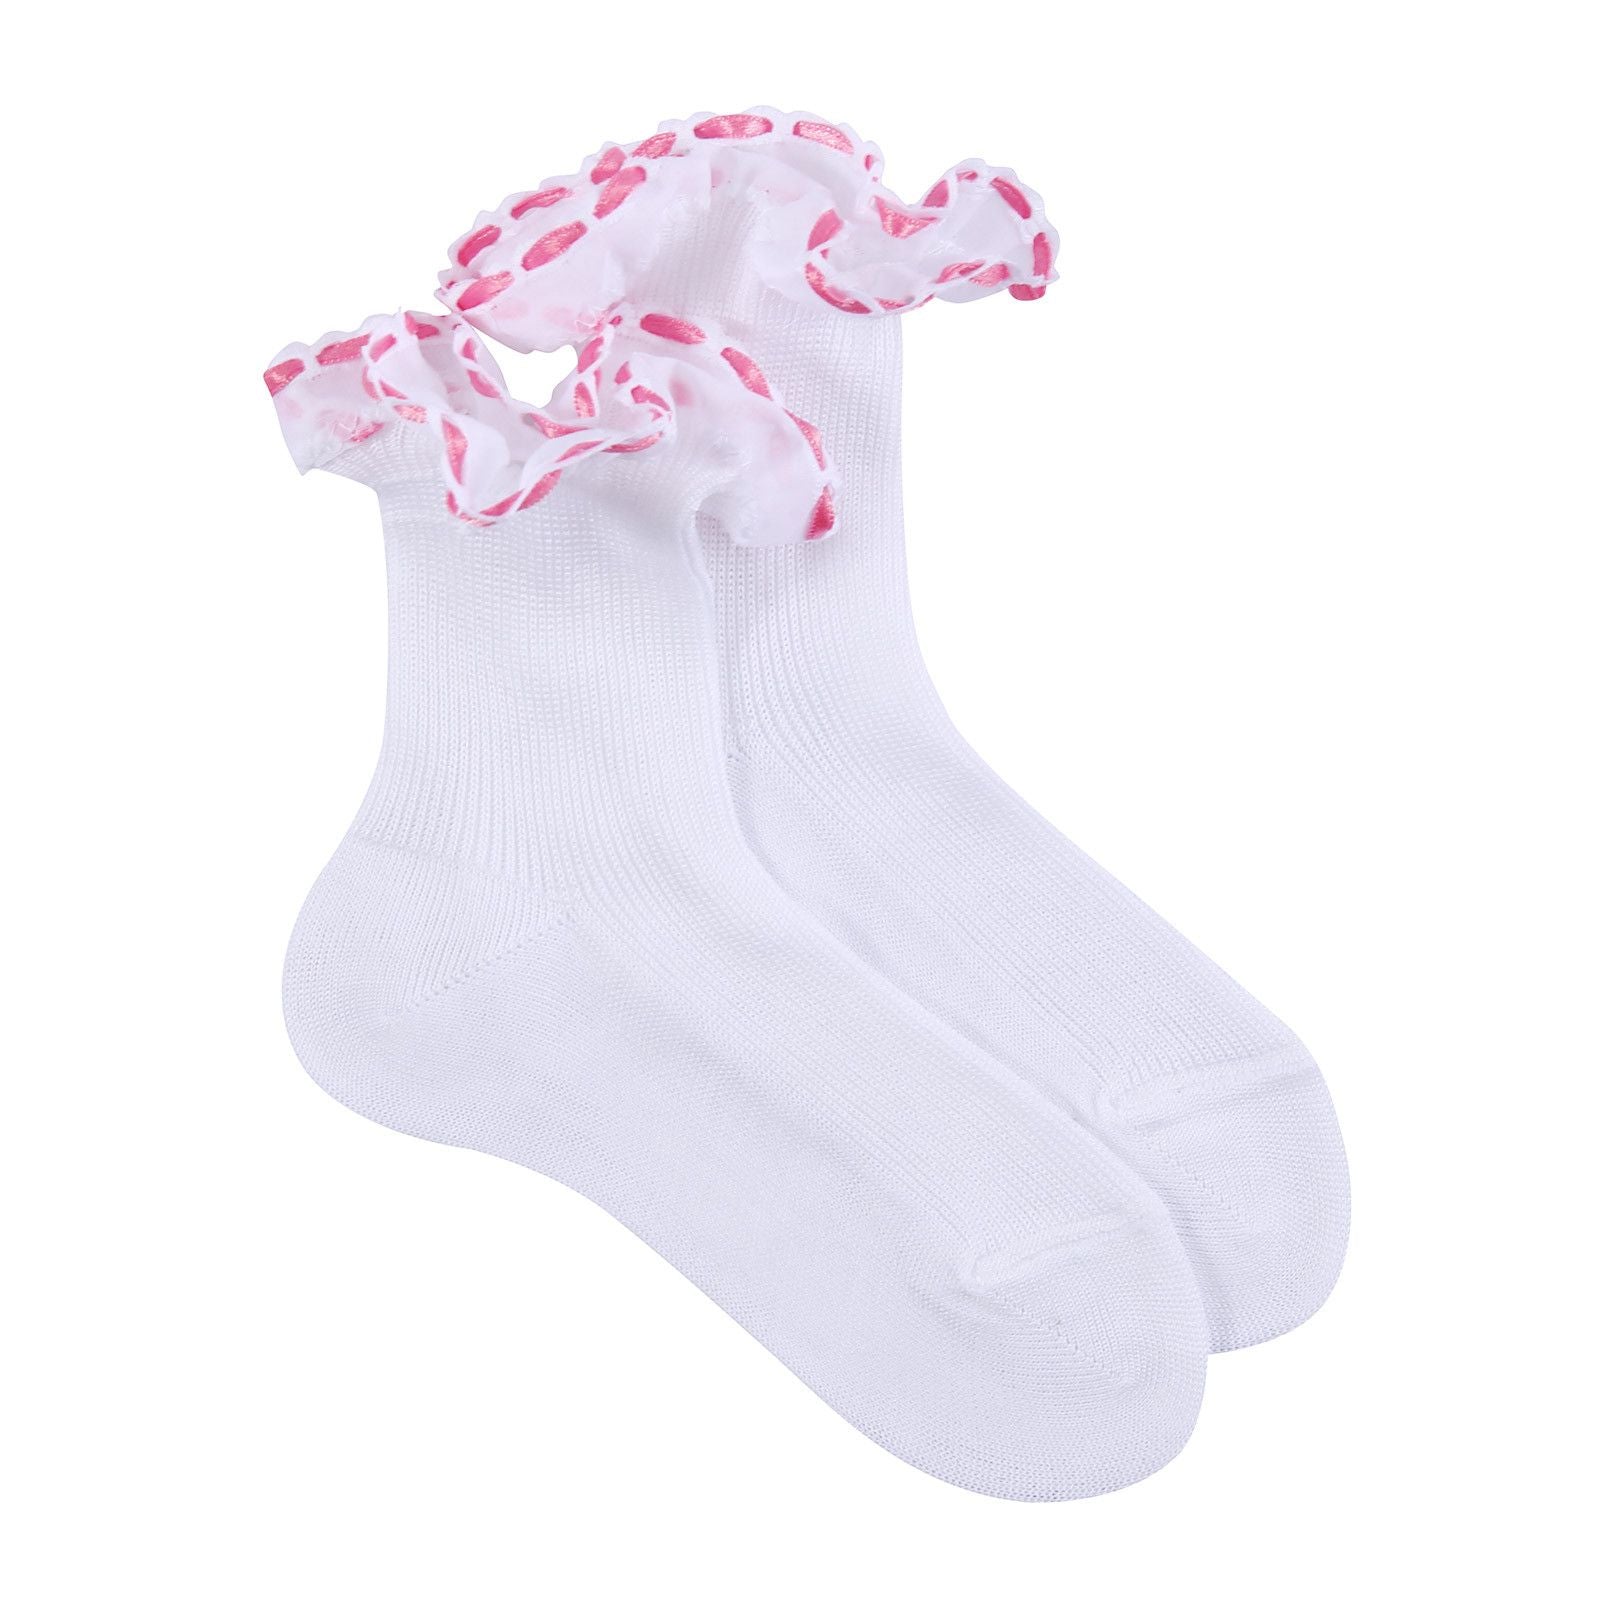 Girls White Cotton Short Socks With Pink Strap Ankle - CÉMAROSE | Children's Fashion Store